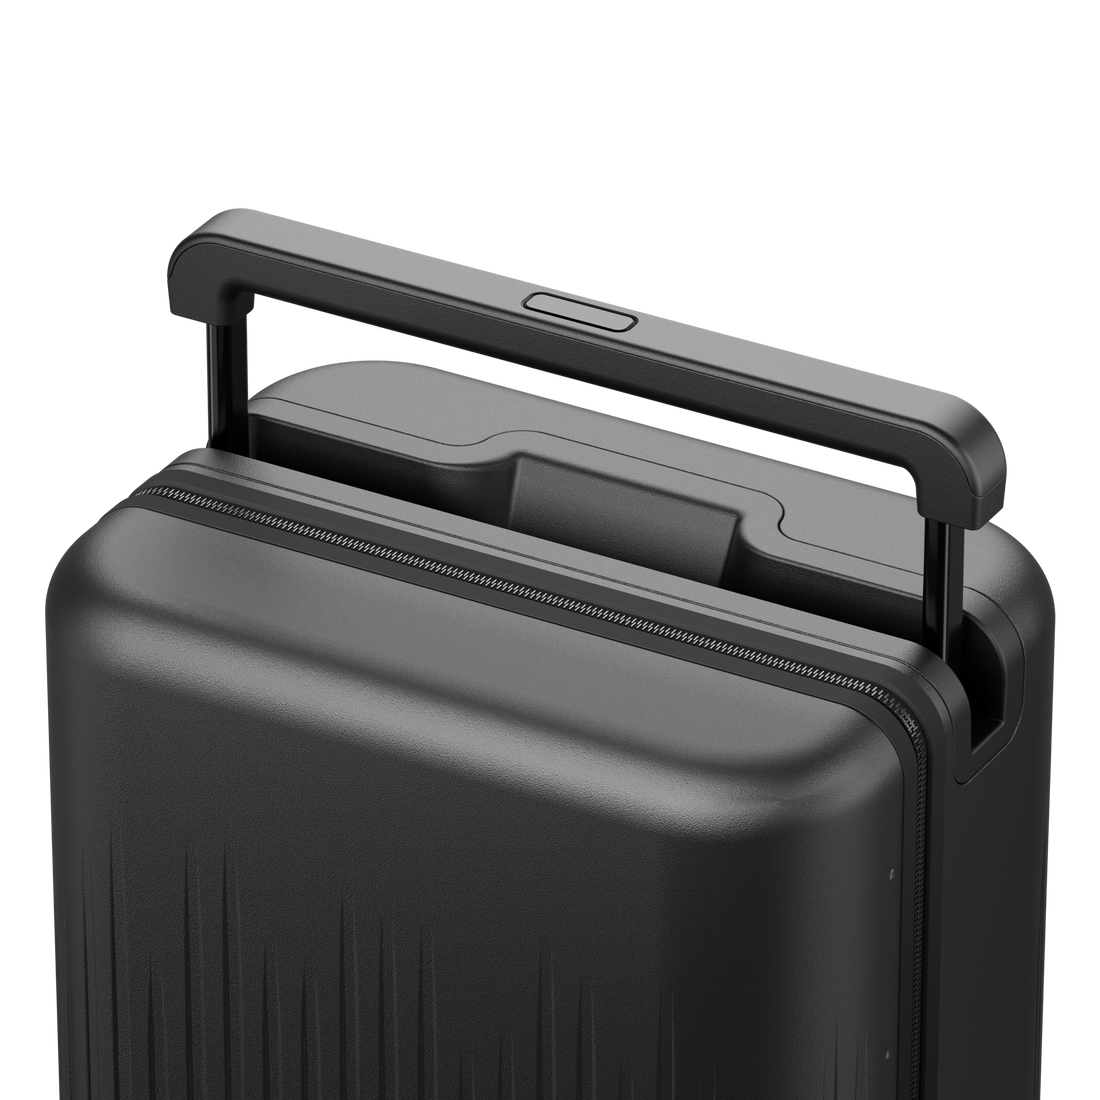 3-in-1 Expandable Hardside Luggage